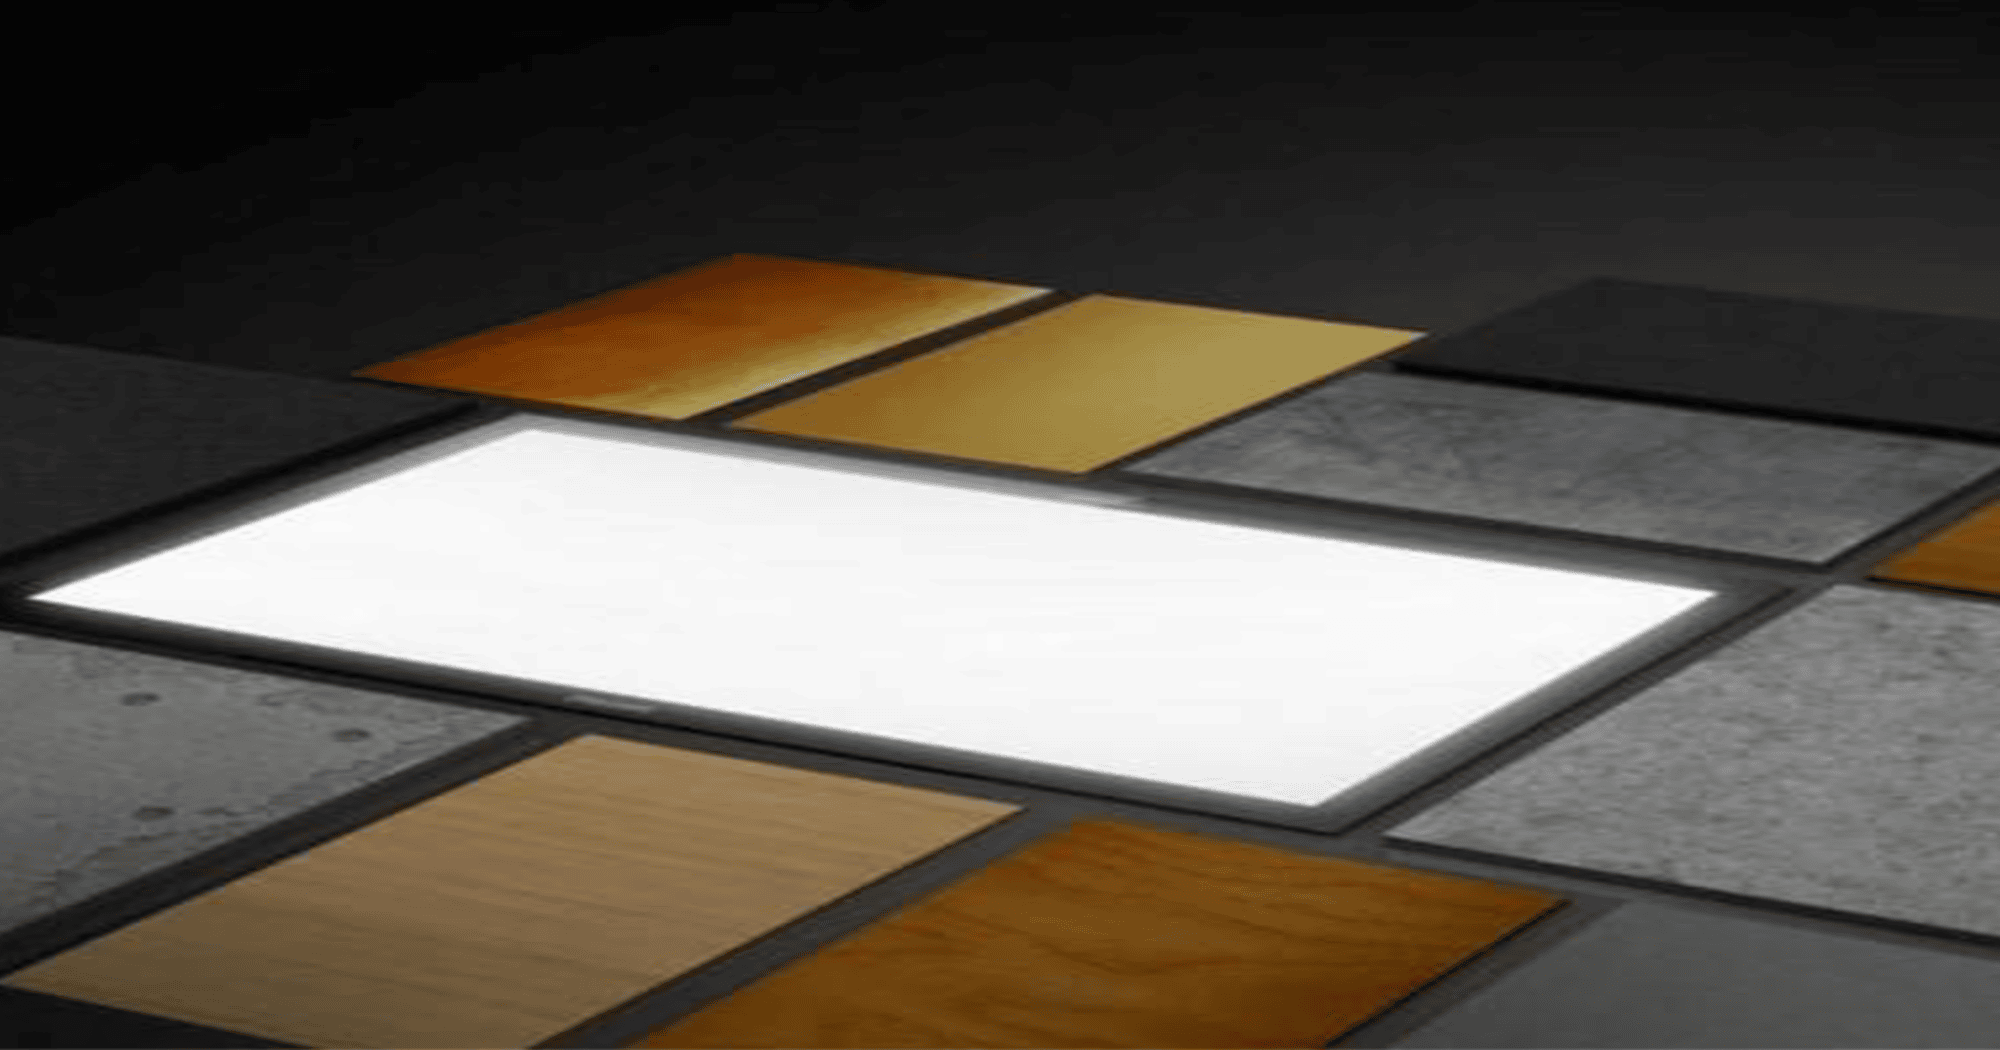 OLEDWorks light panel in textured background.